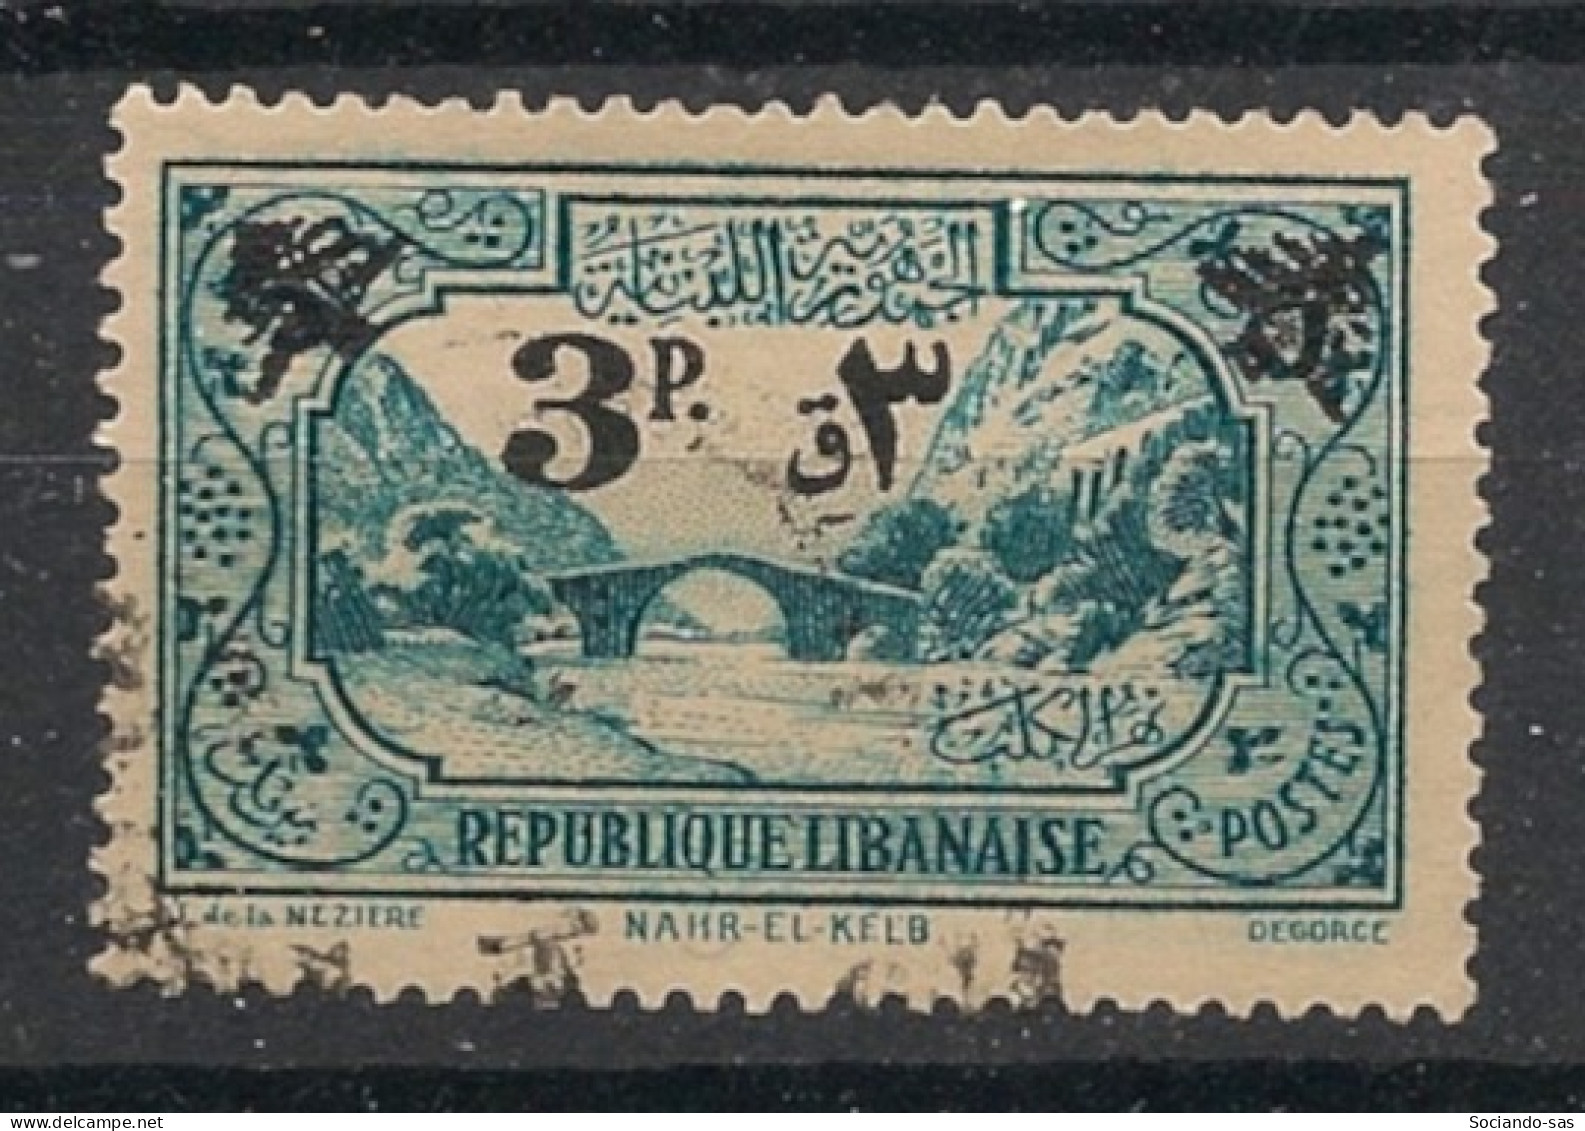 GRAND LIBAN - 1943-45 - N°YT. 182 - 3pi Sur 5pi Vert-bleu - Oblitéré / Used - Oblitérés